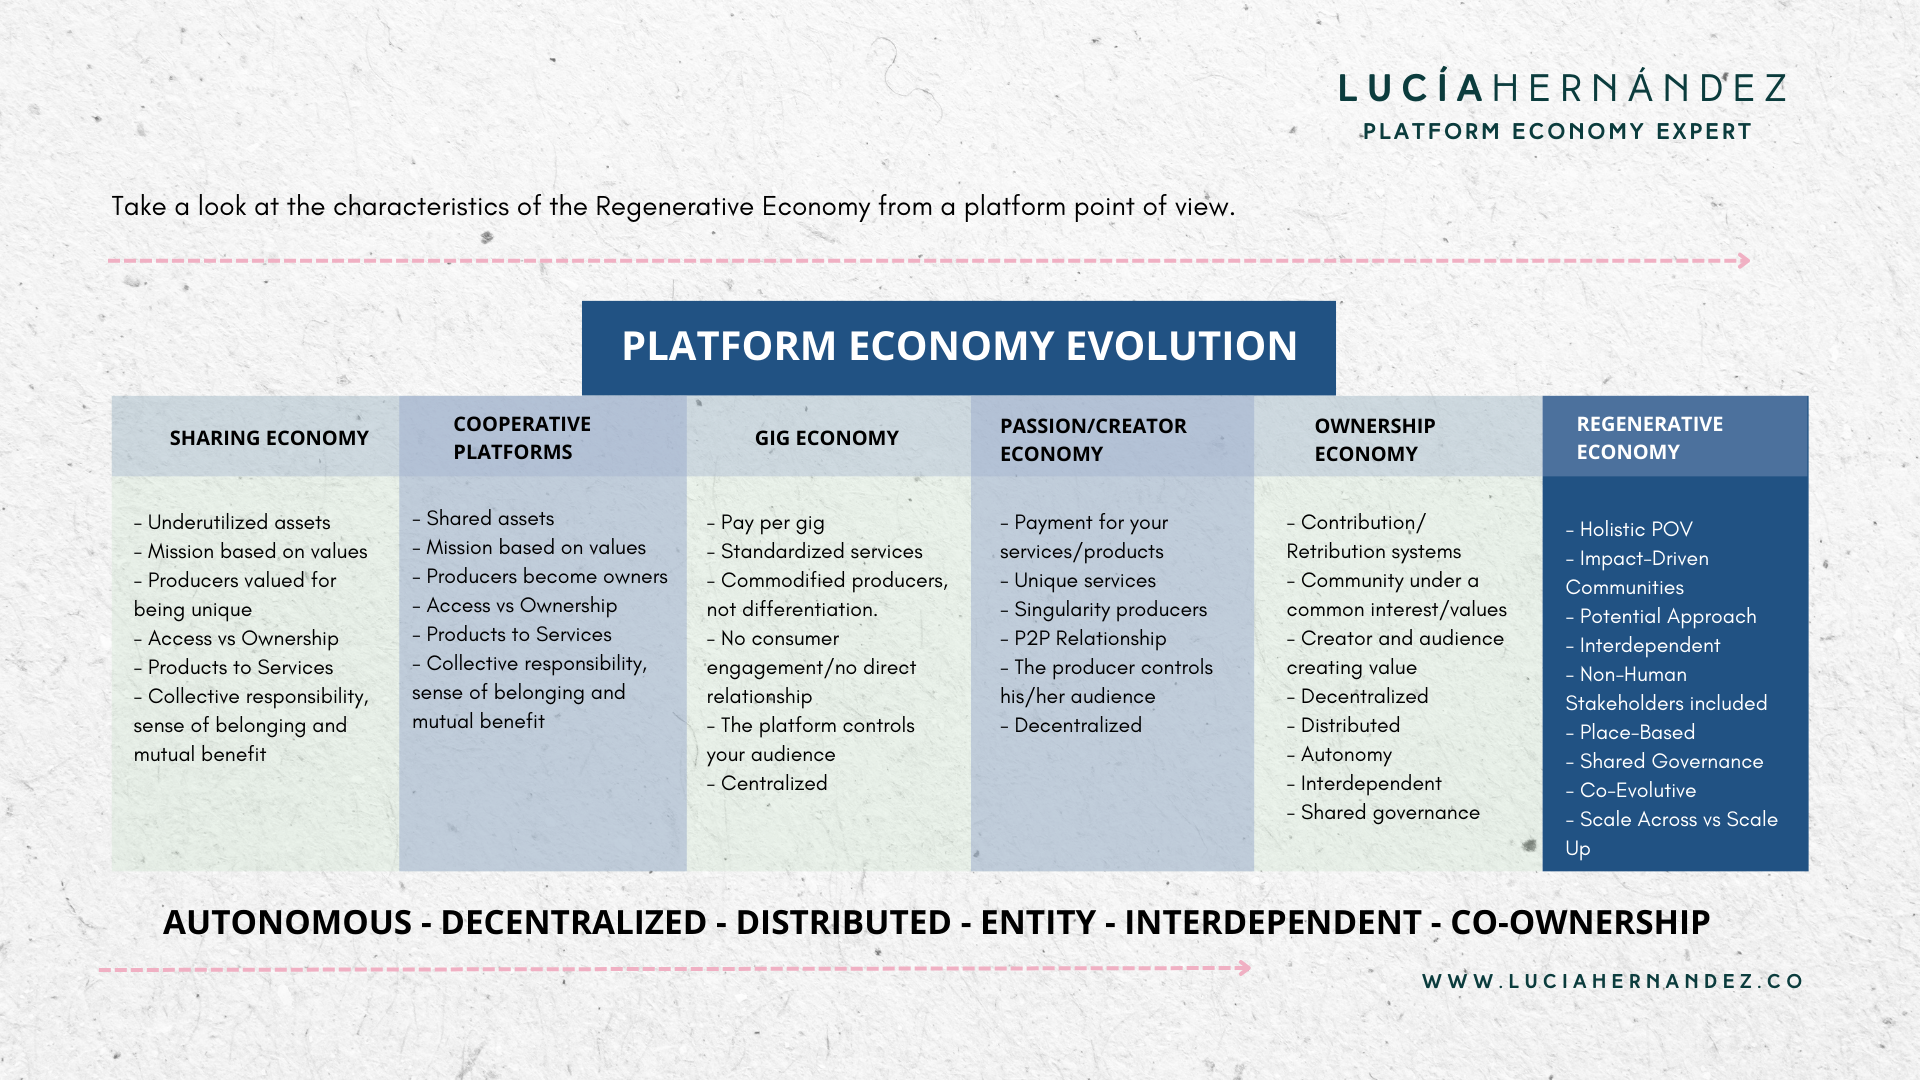 A review of the Platform Economy